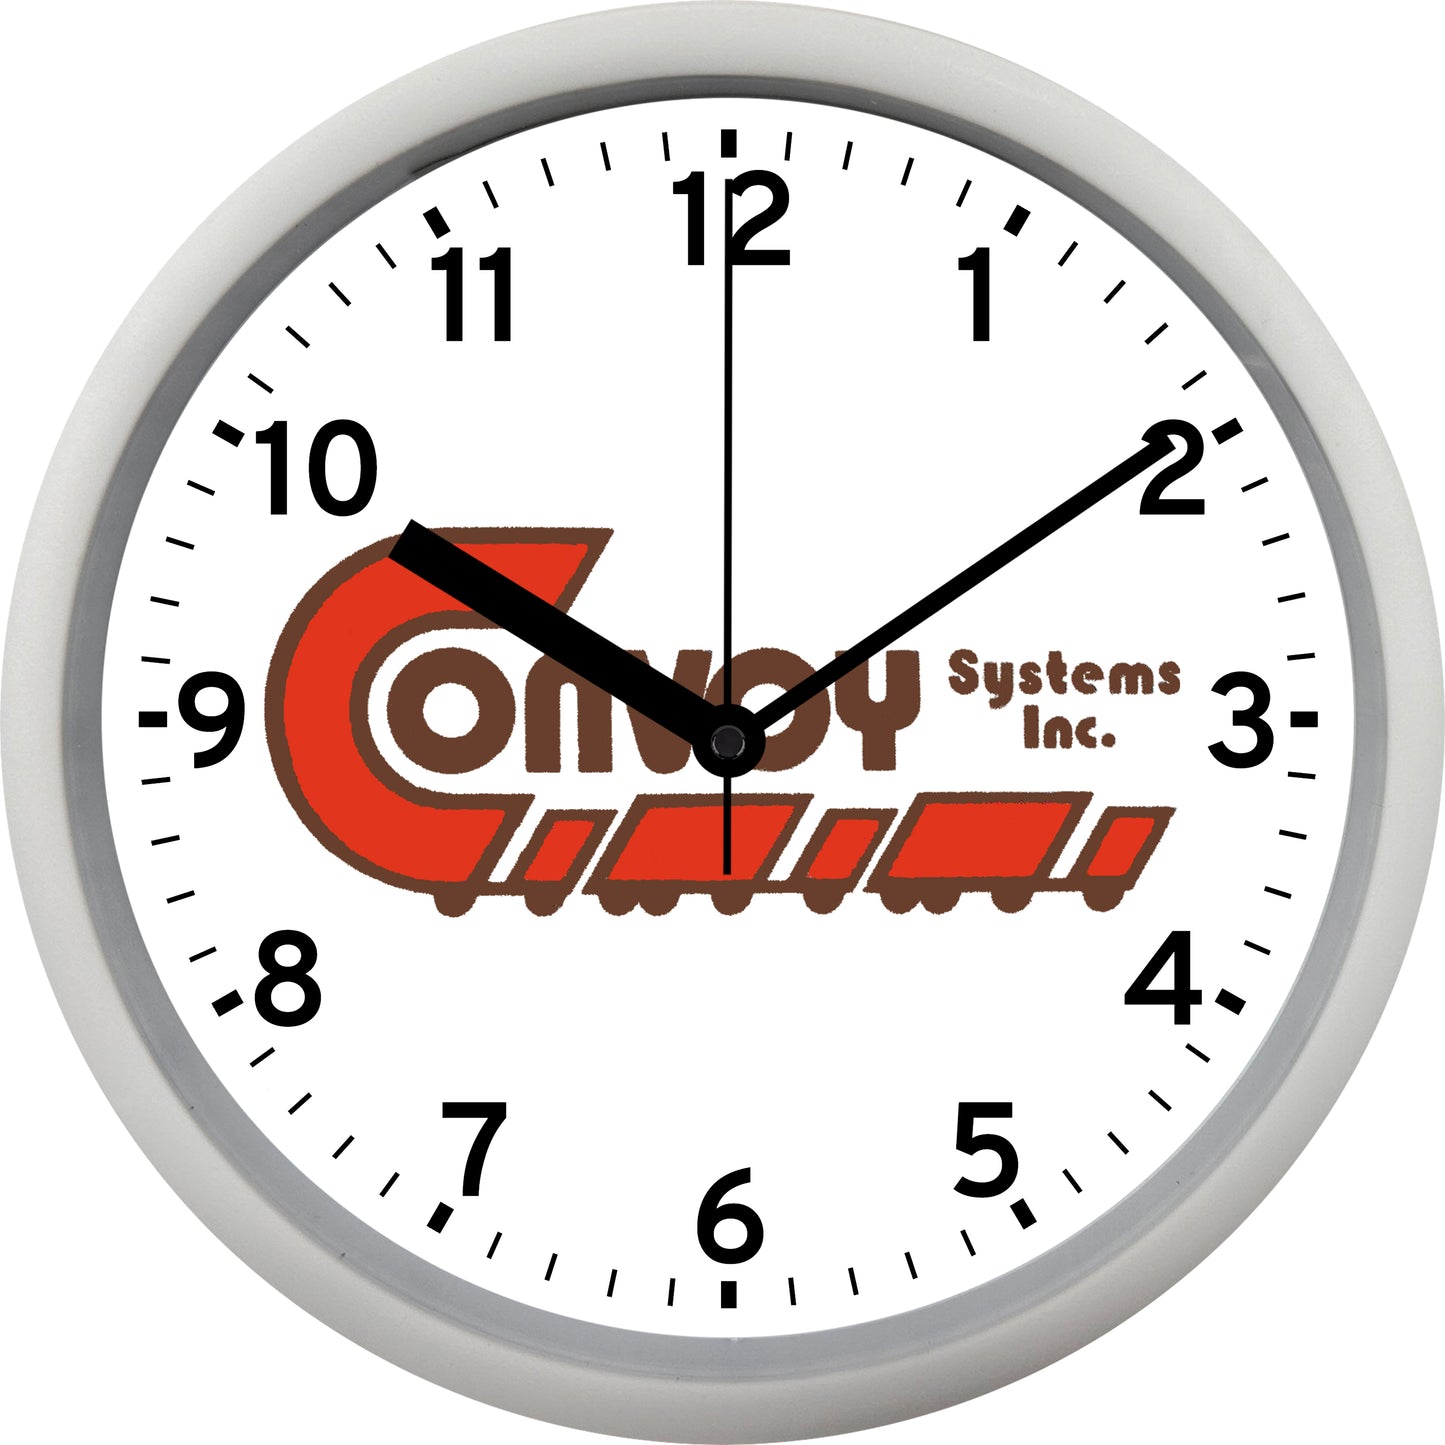 Convoy Systems Inc. Wall Clock